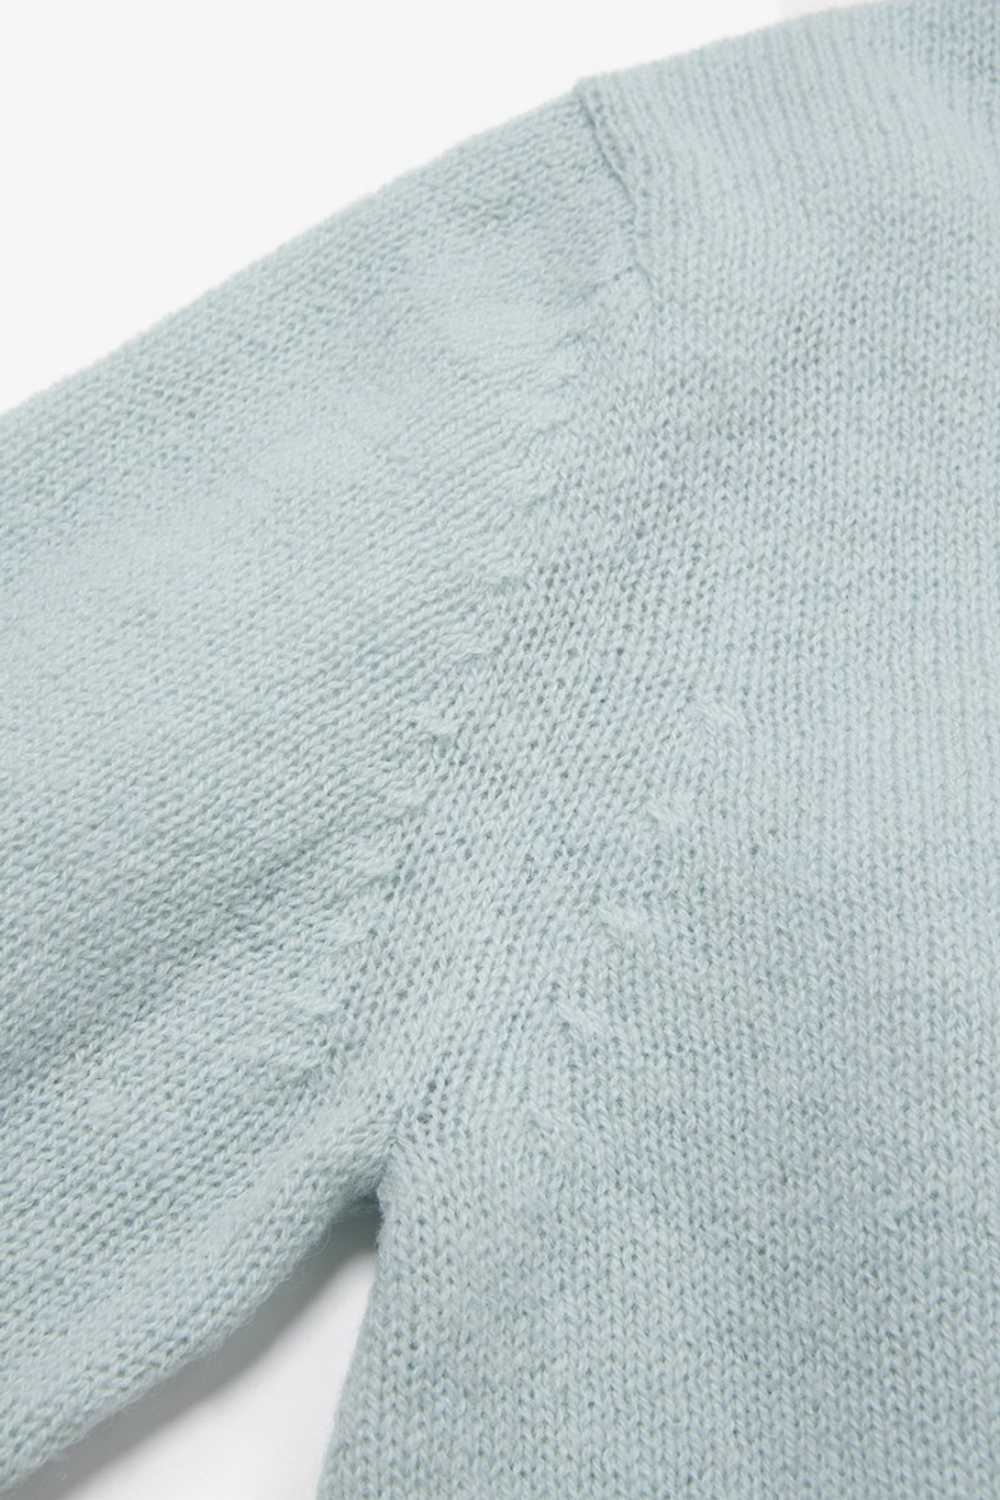 Auralee - pure shetland wool knit sweater mint 5 - image 4